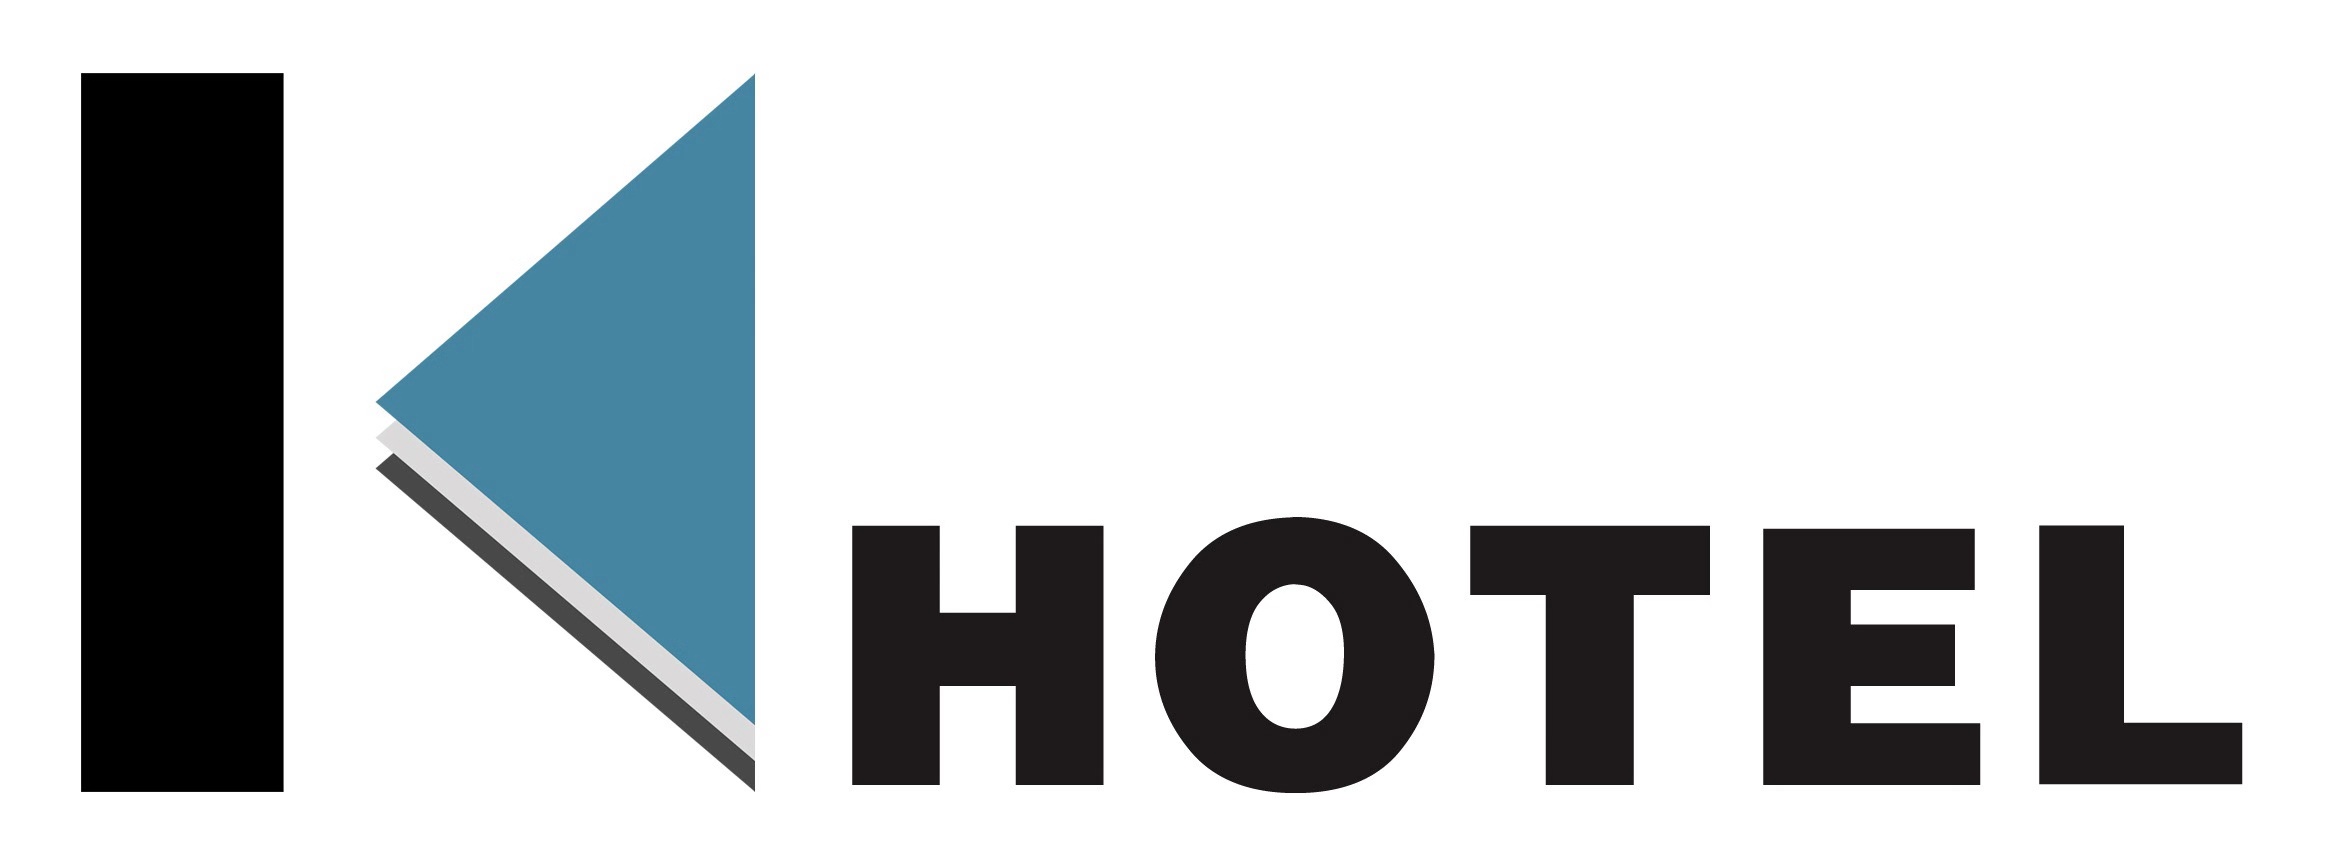 K Hotel International Pte. Ltd. logo